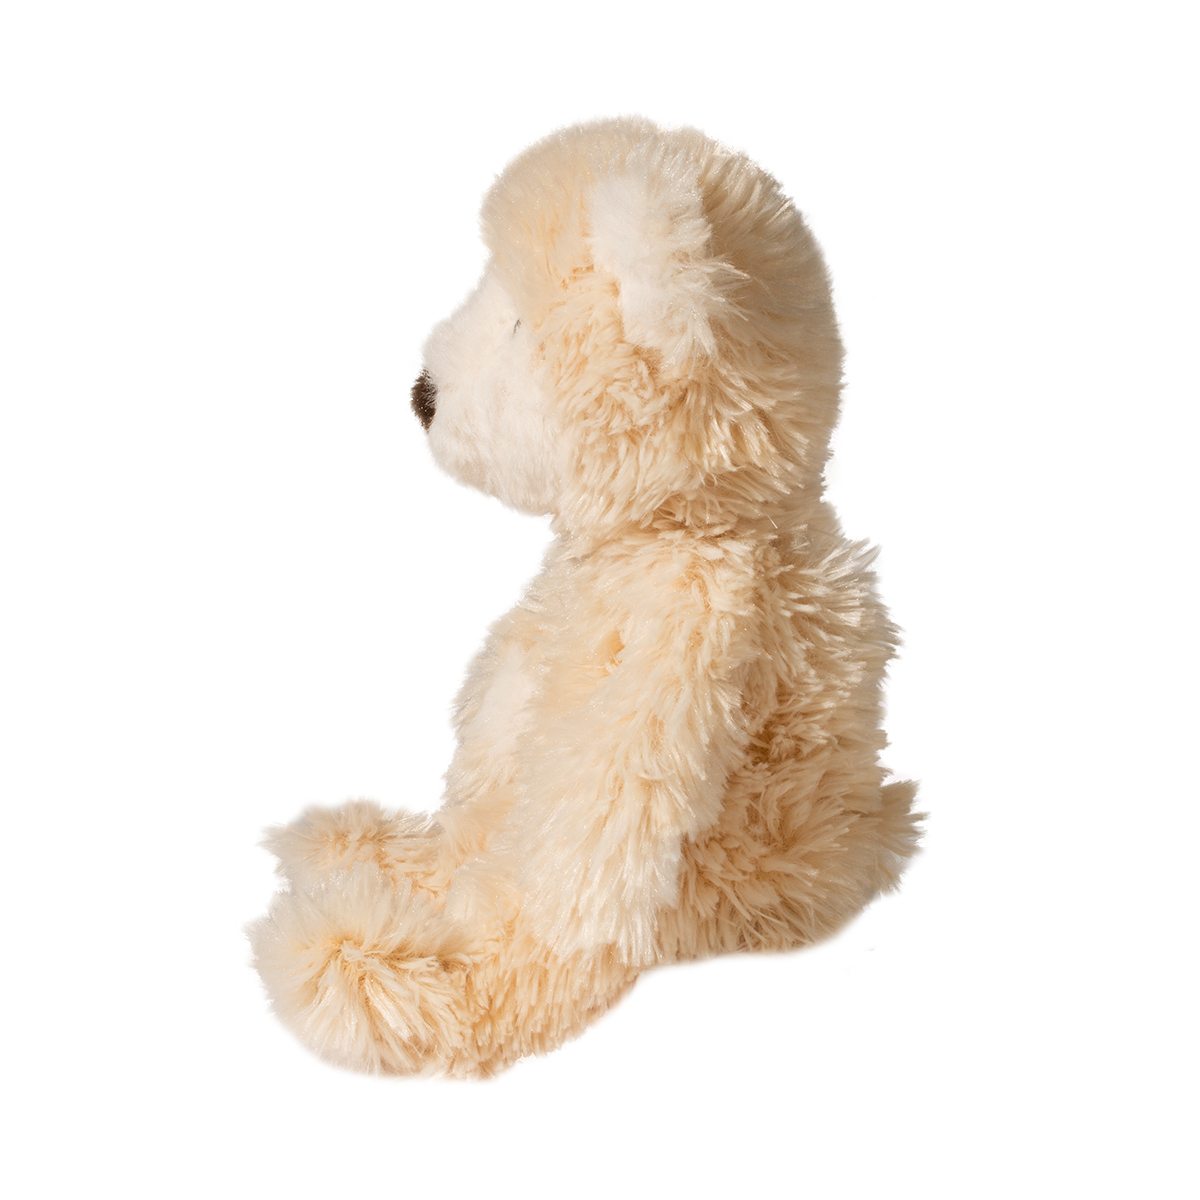 Douglas Cuddle Toys #7820 BRULEE the Plush CREAM TEDDY BEAR Stuffed Animal 